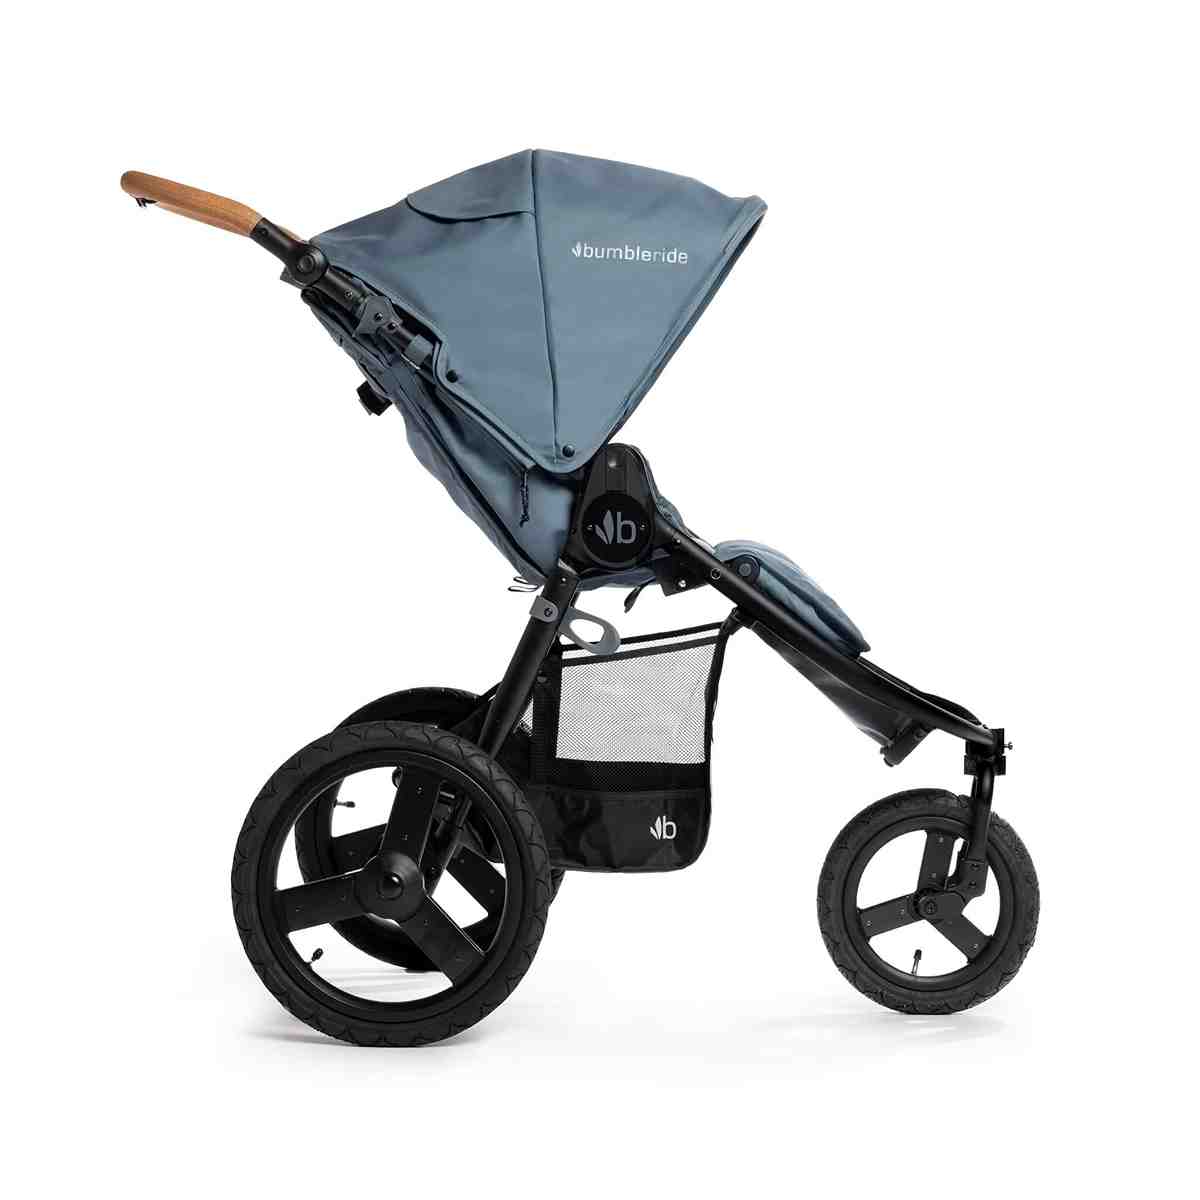 Bumbleride Speed Jogging Stroller, 850053131127 - ANB Baby